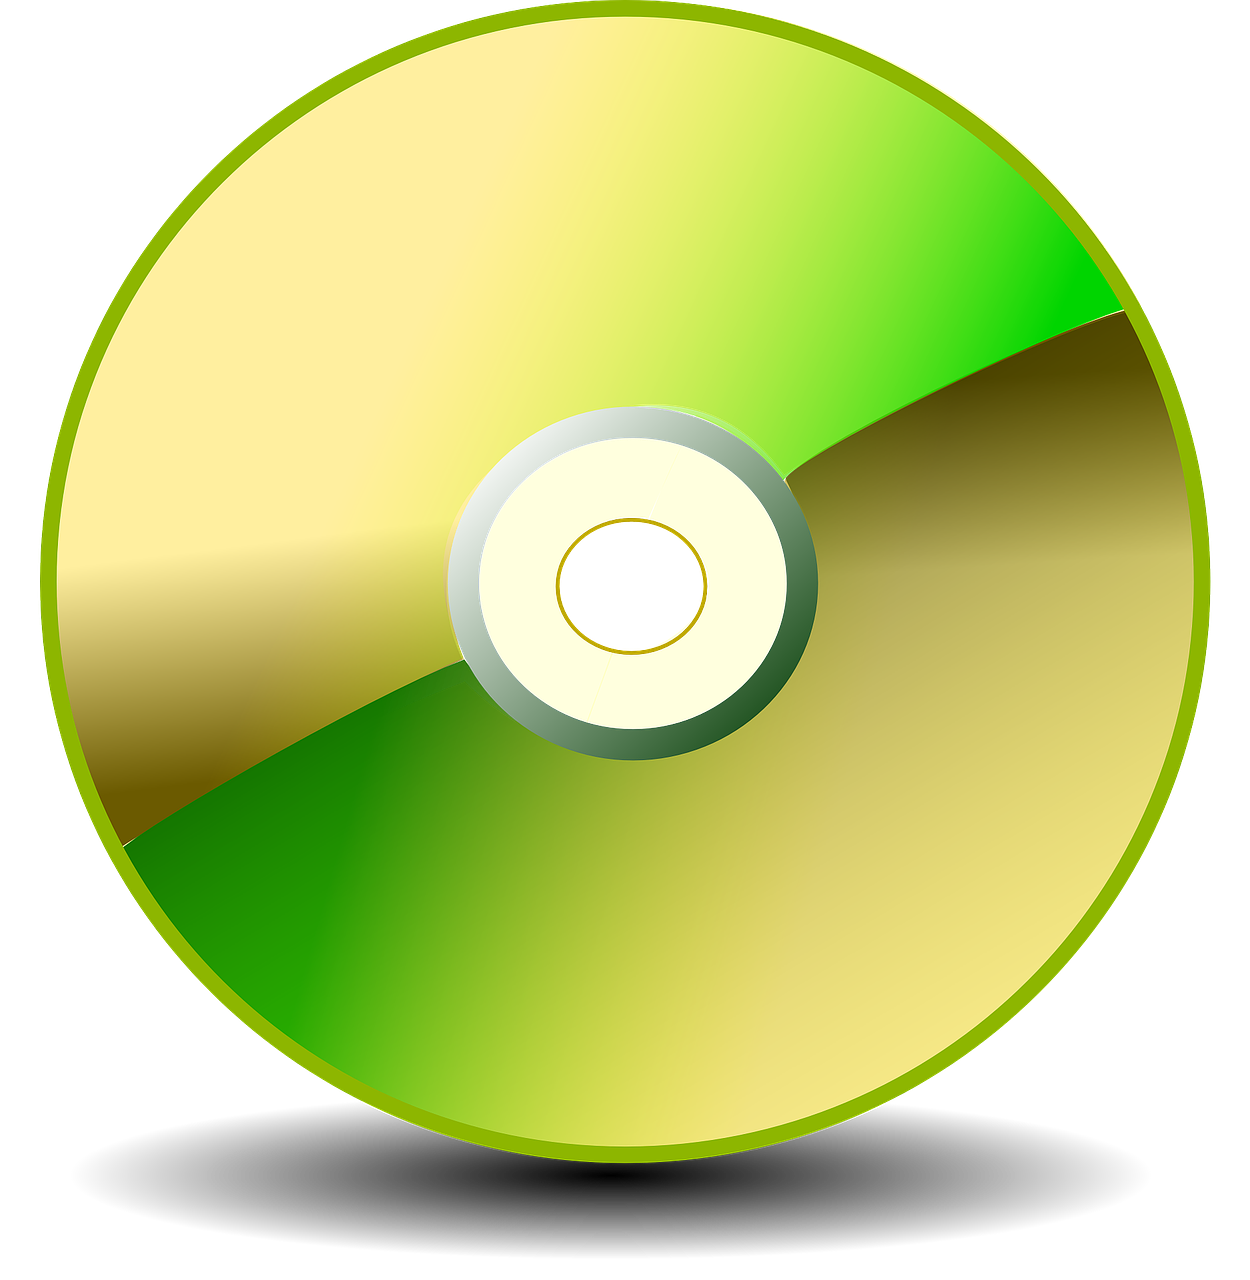 disc cd compact disc free photo